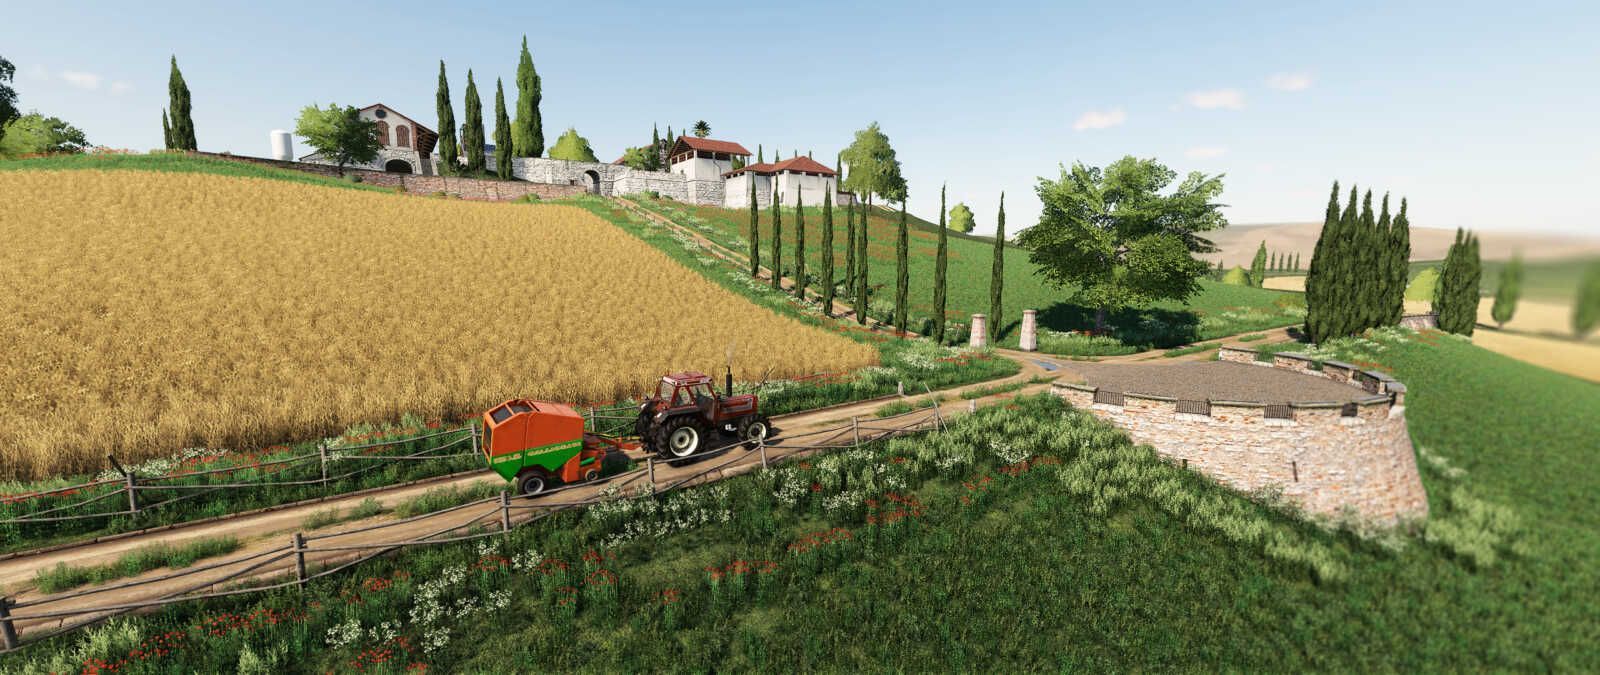 Italia : Edomod signe la plus belle map Farming Simulator 19 - SimulAgri.fr